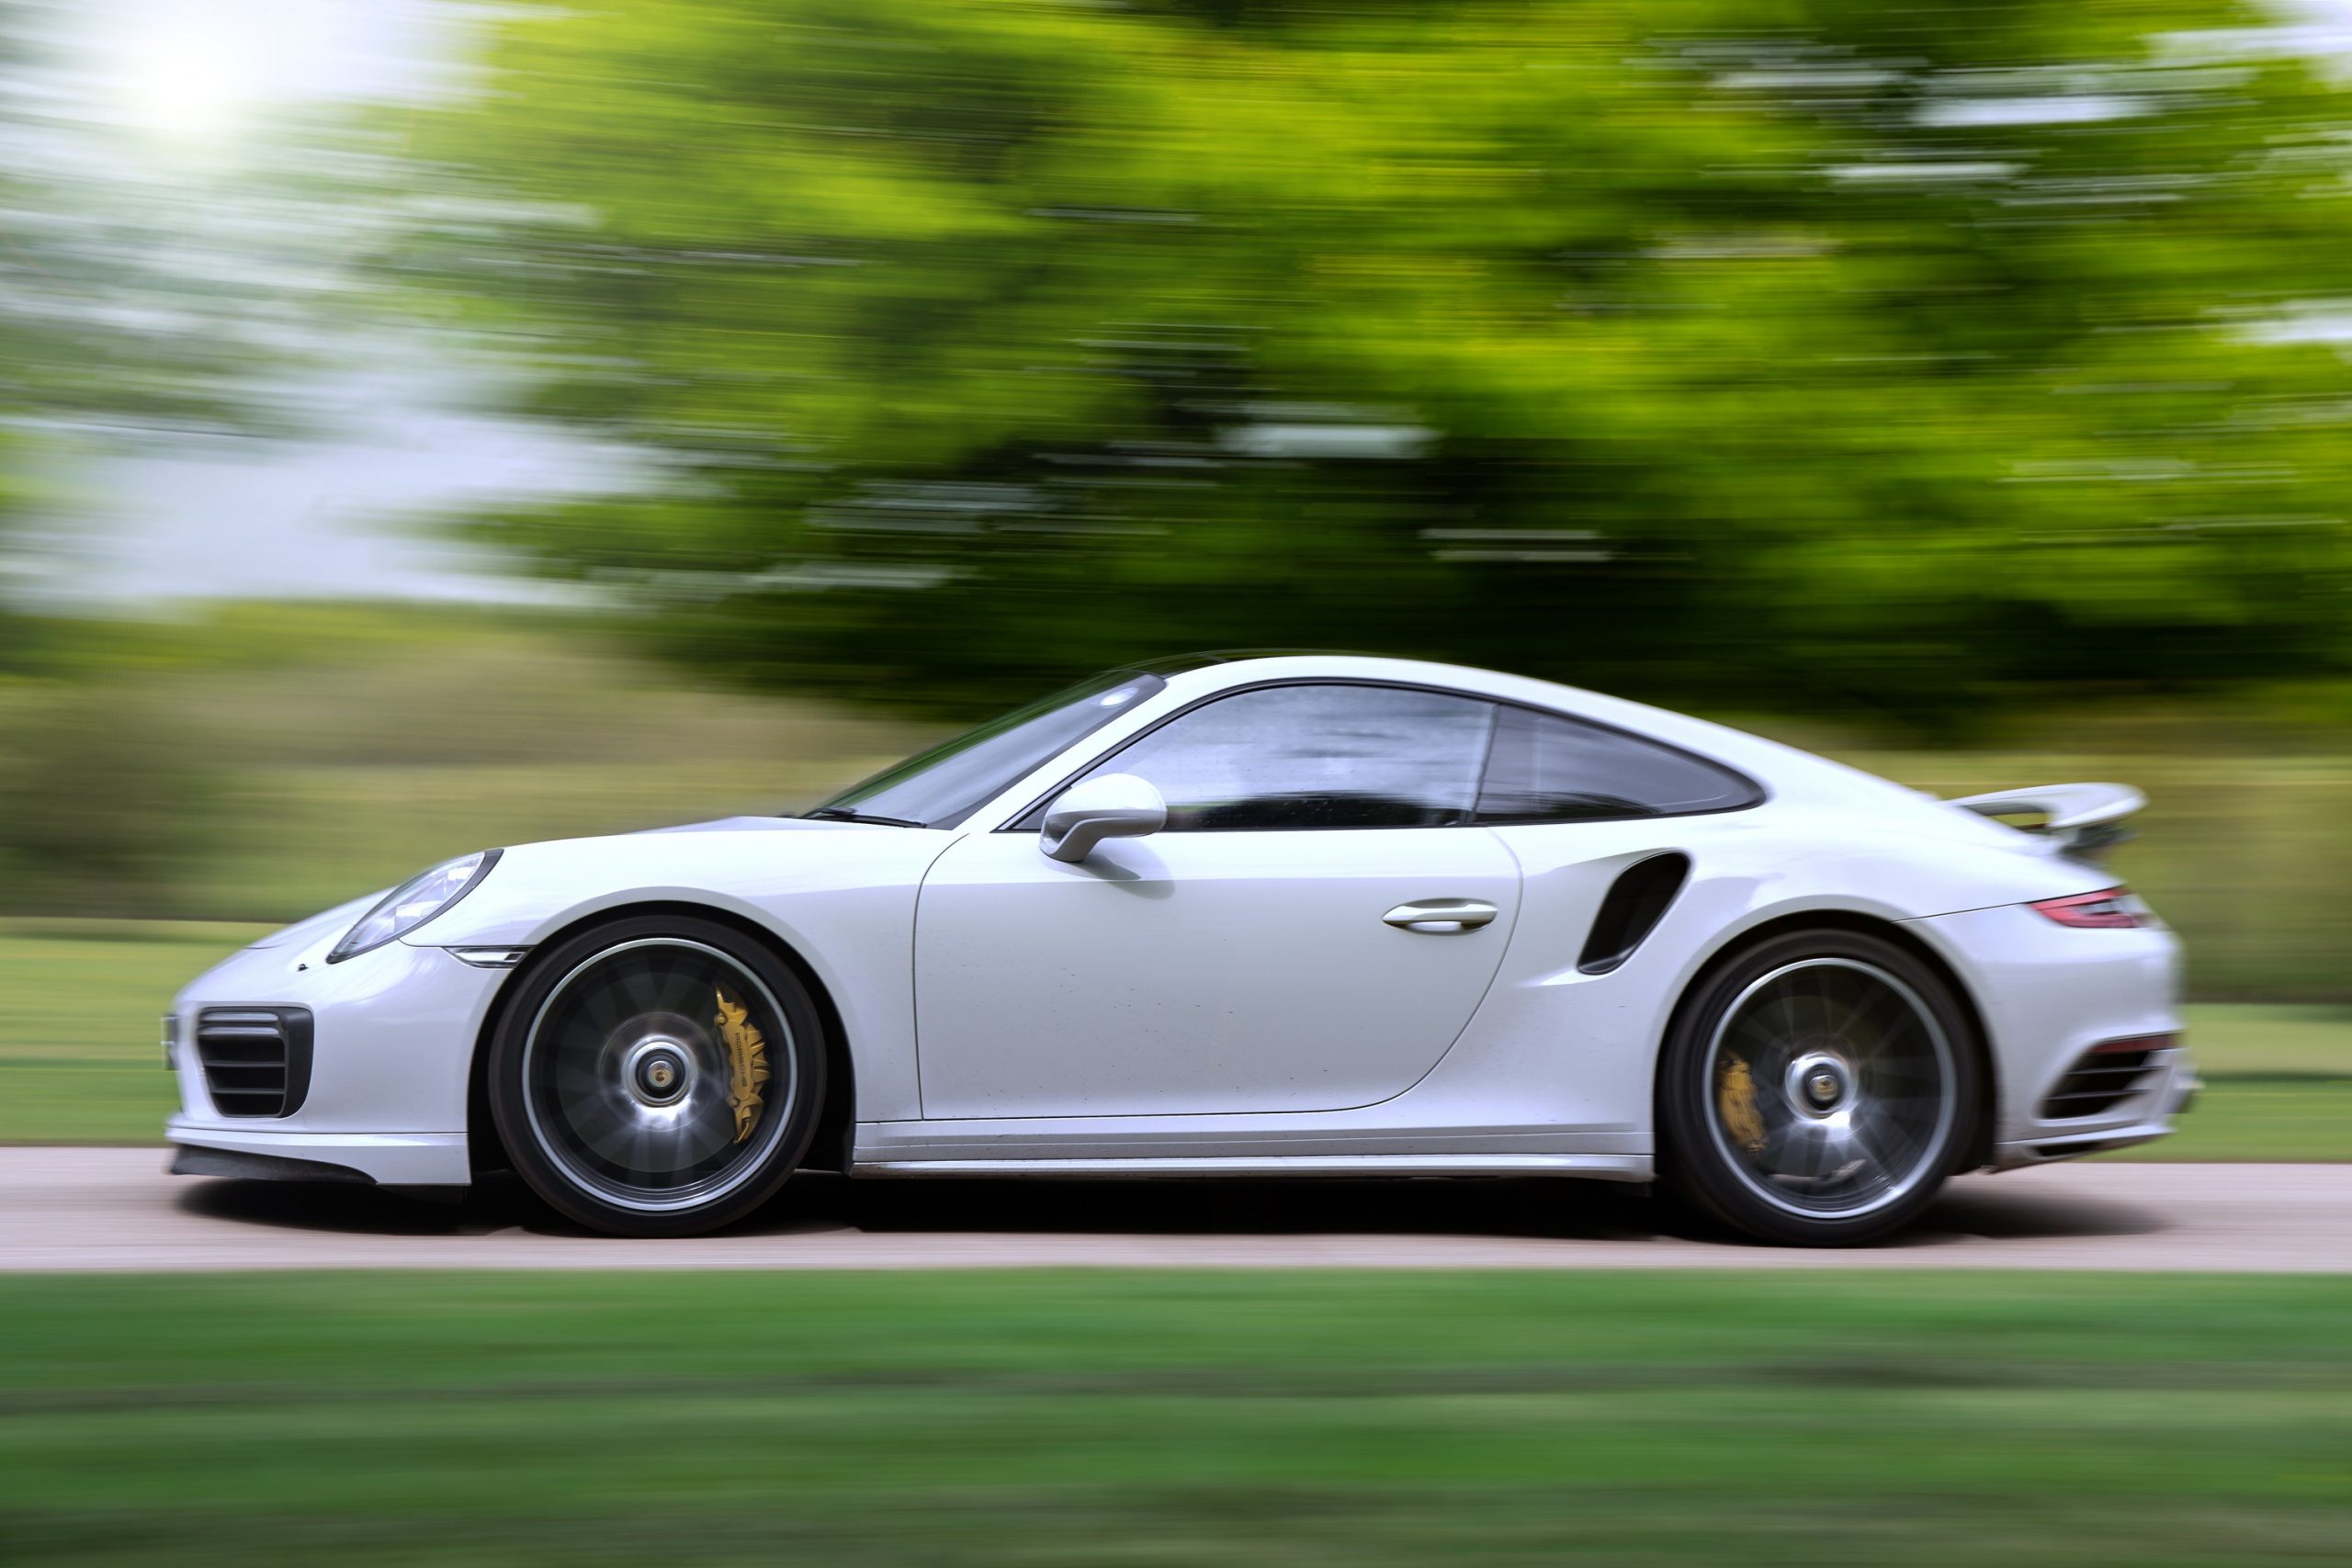 A white Porsche 911 Turbo S shot in profile on a back road